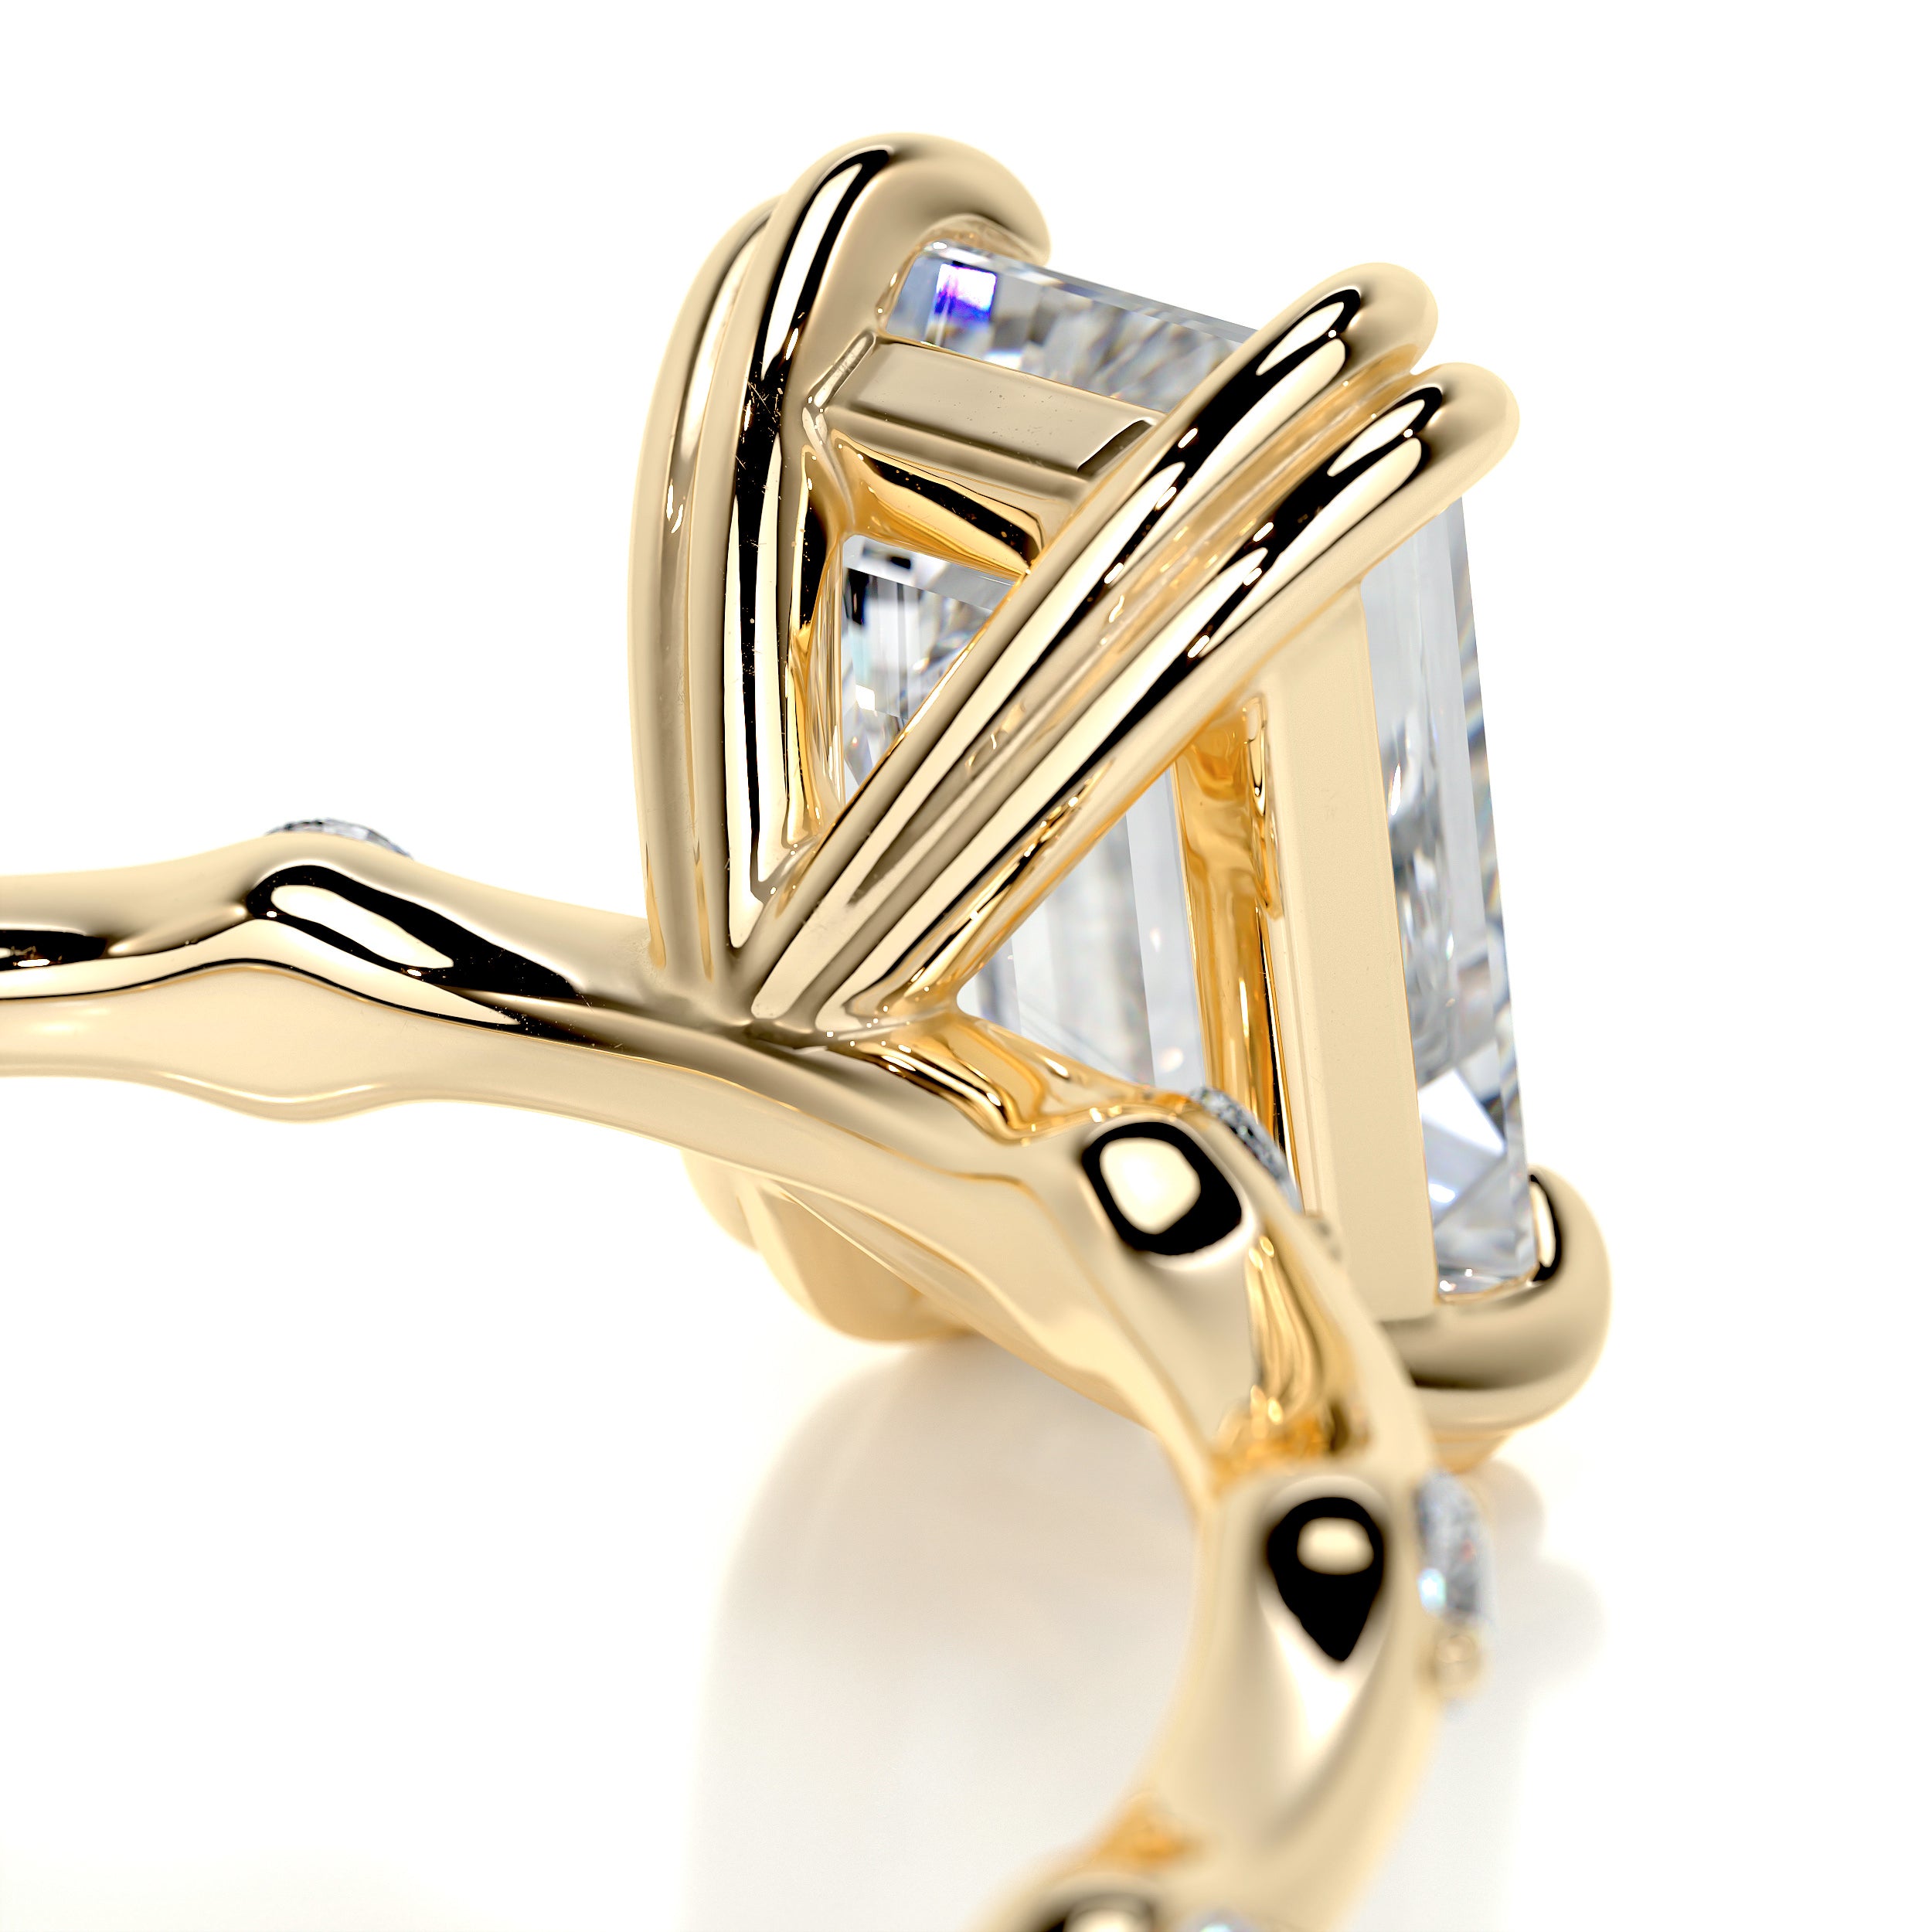 Wilma Diamond Engagement Ring   (1.65 Carat) -18K Yellow Gold